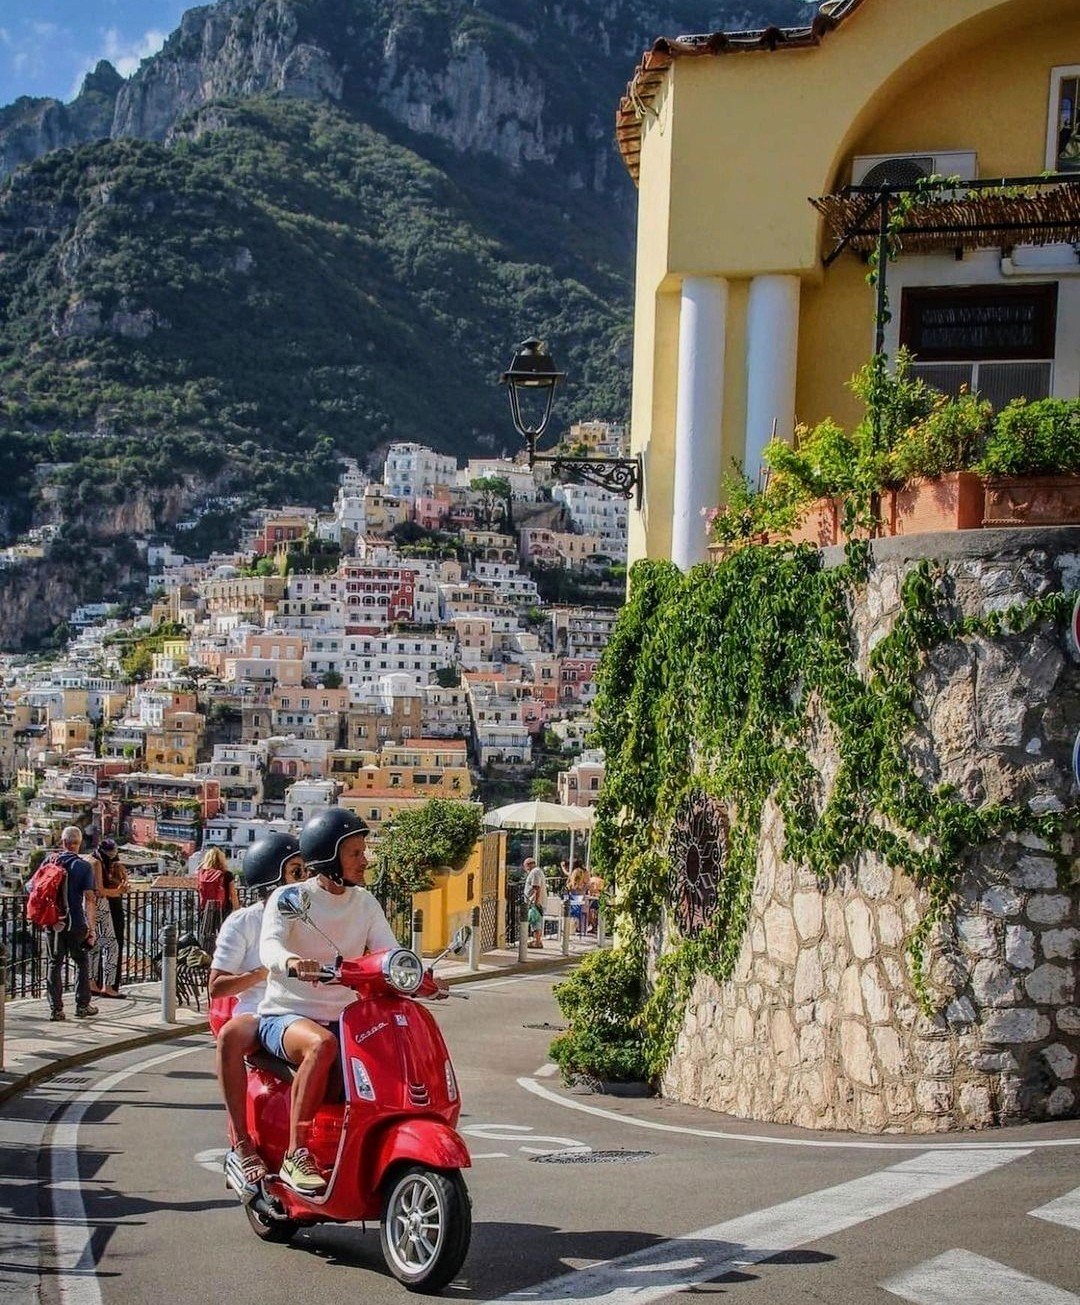 Vespa Rental & Vespa Tours in Amalfi Coast